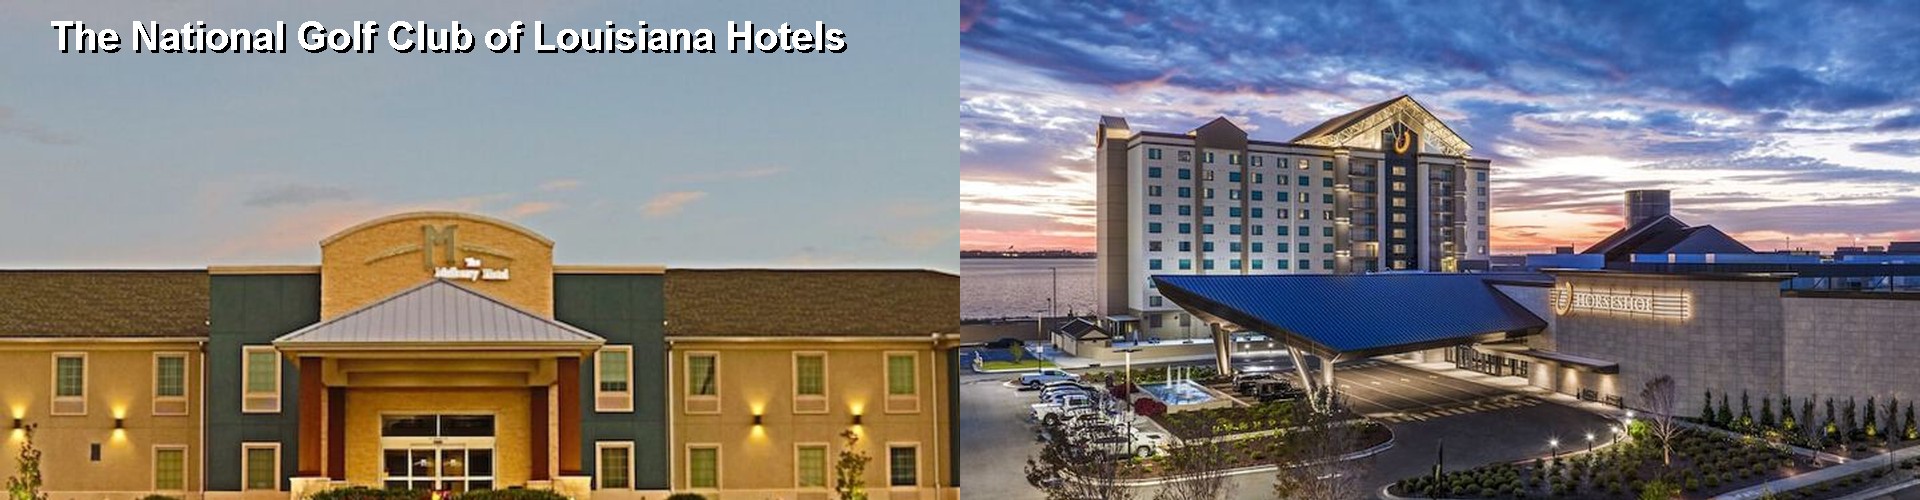 3 Best Hotels near The National Golf Club of Louisiana